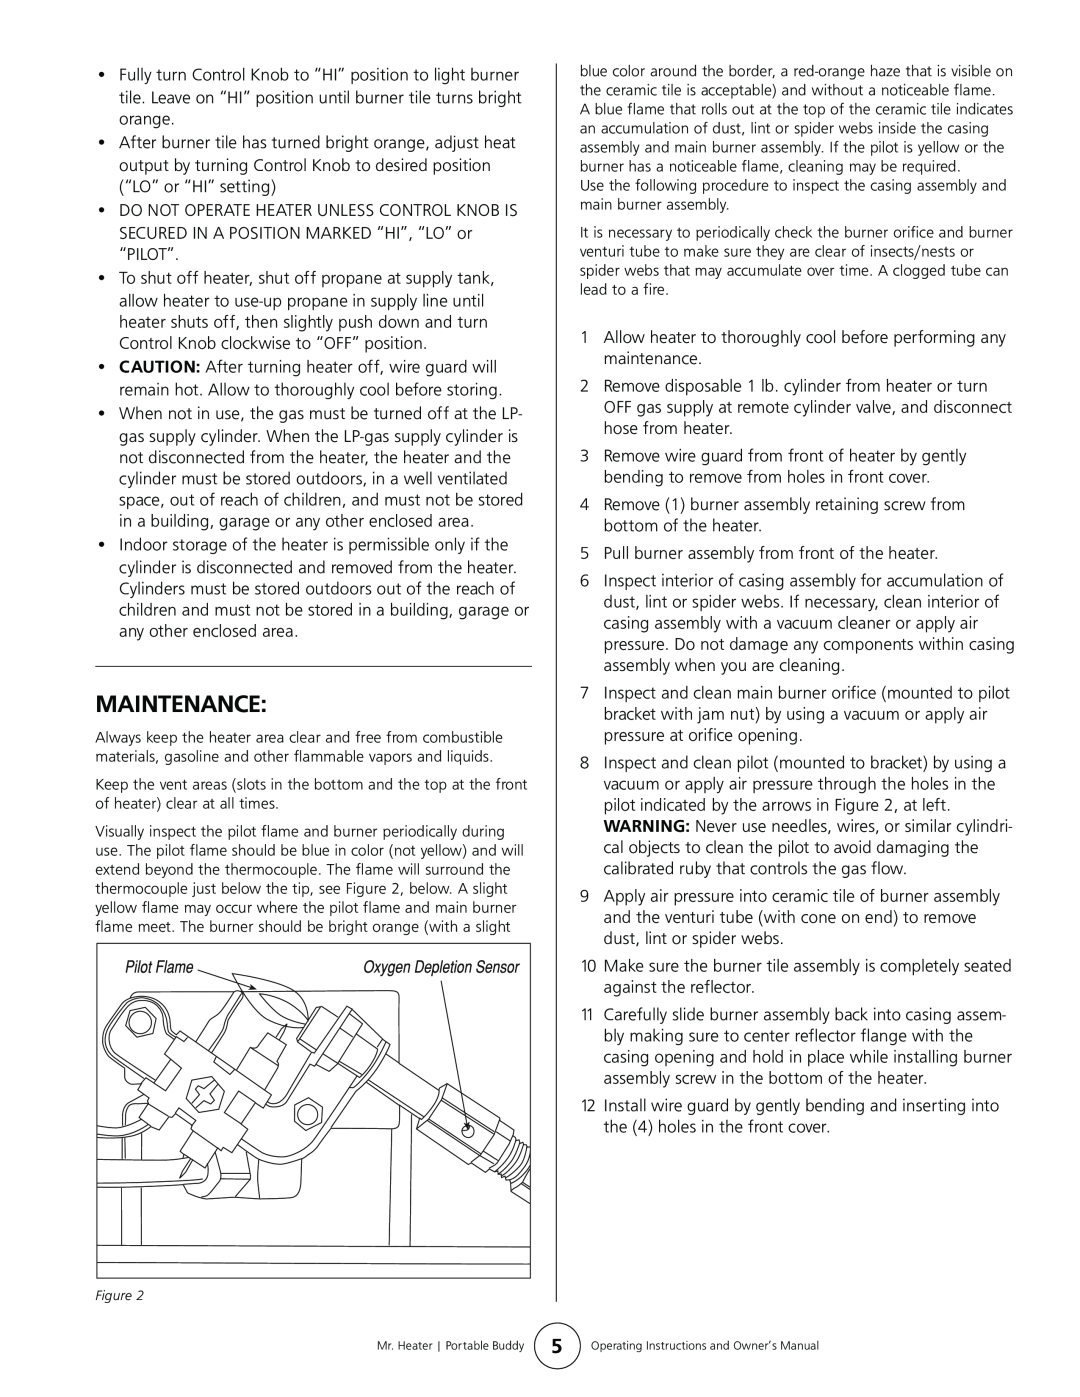 Mr. Heater MH9B owner manual Maintenance 